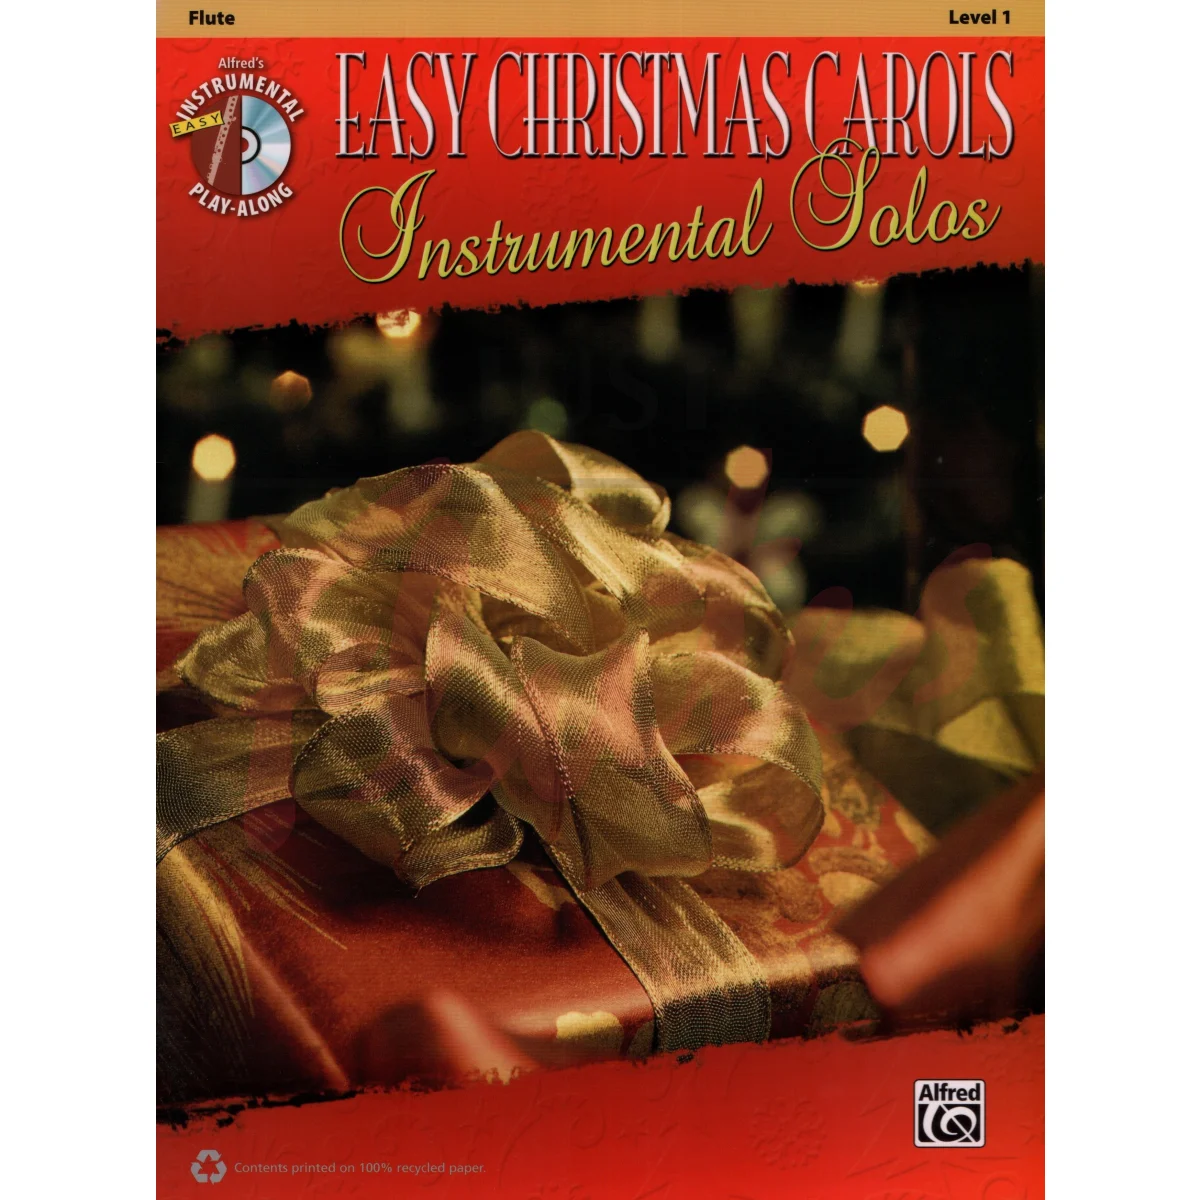 Easy Christmas Carols: Instrumental Solos